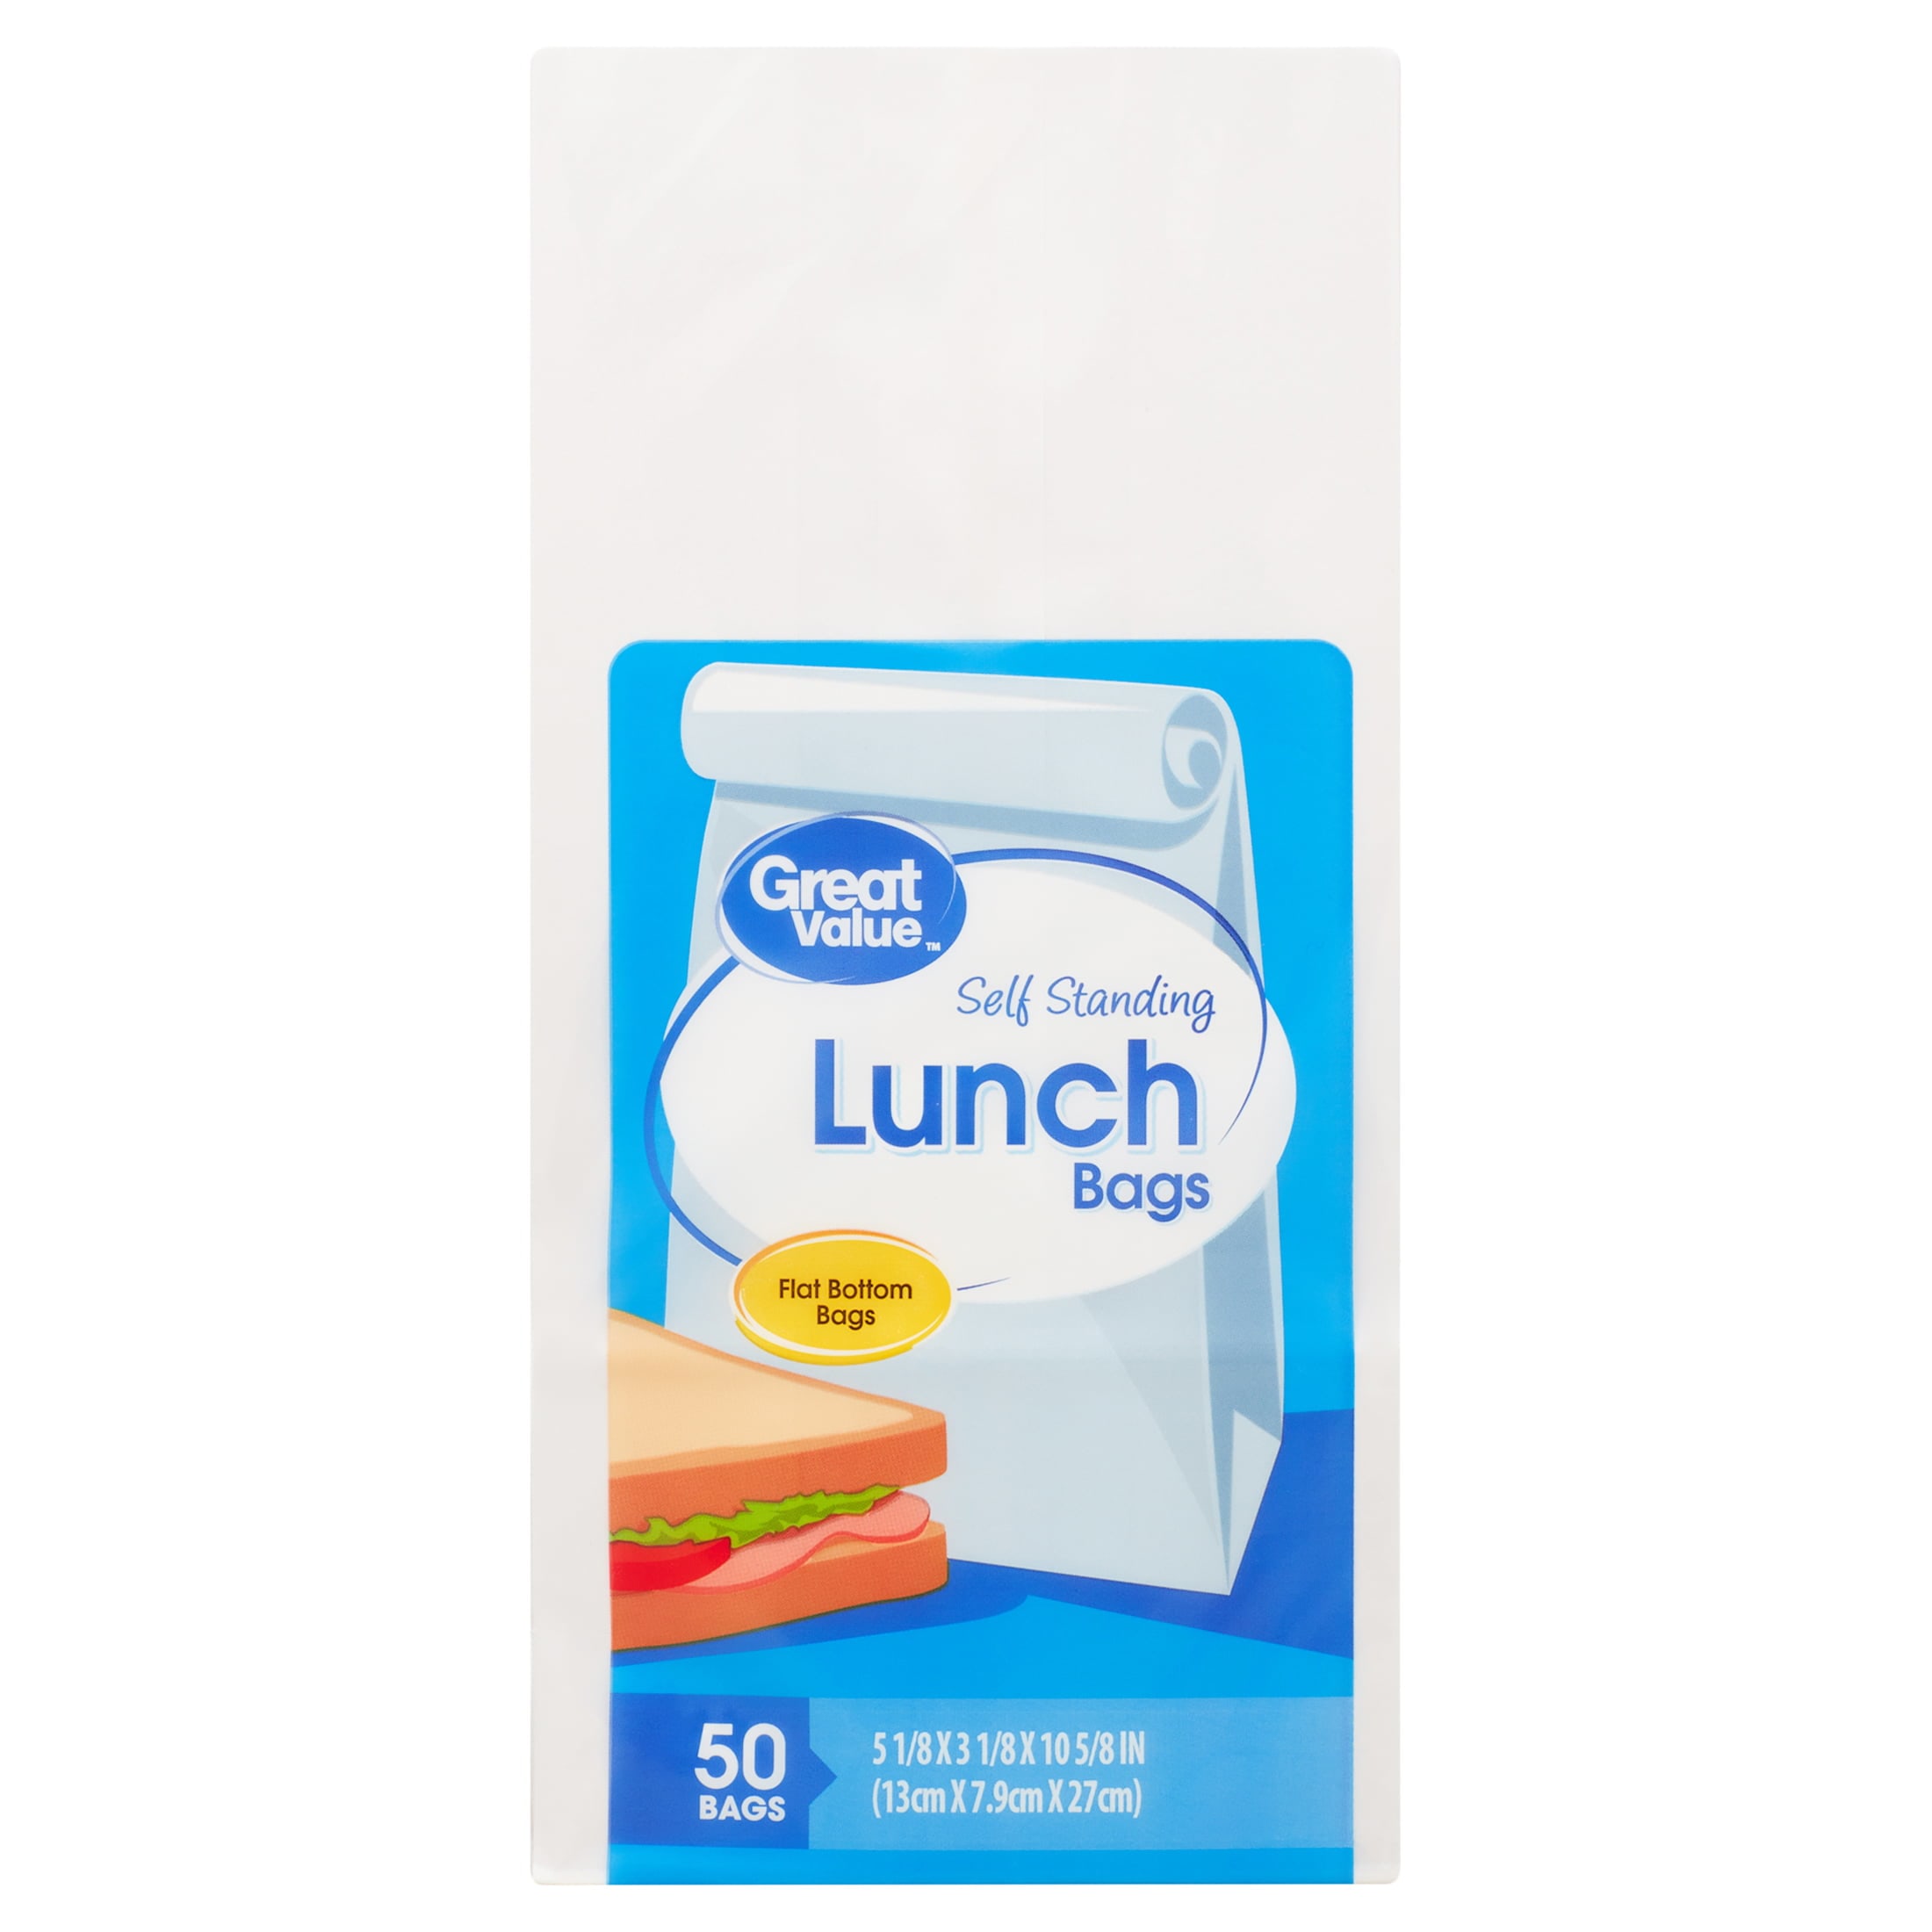 70 White Paper Lunch Bag Illustrations RoyaltyFree Vector Graphics   Clip Art  iStock  White paper bag Paper bag